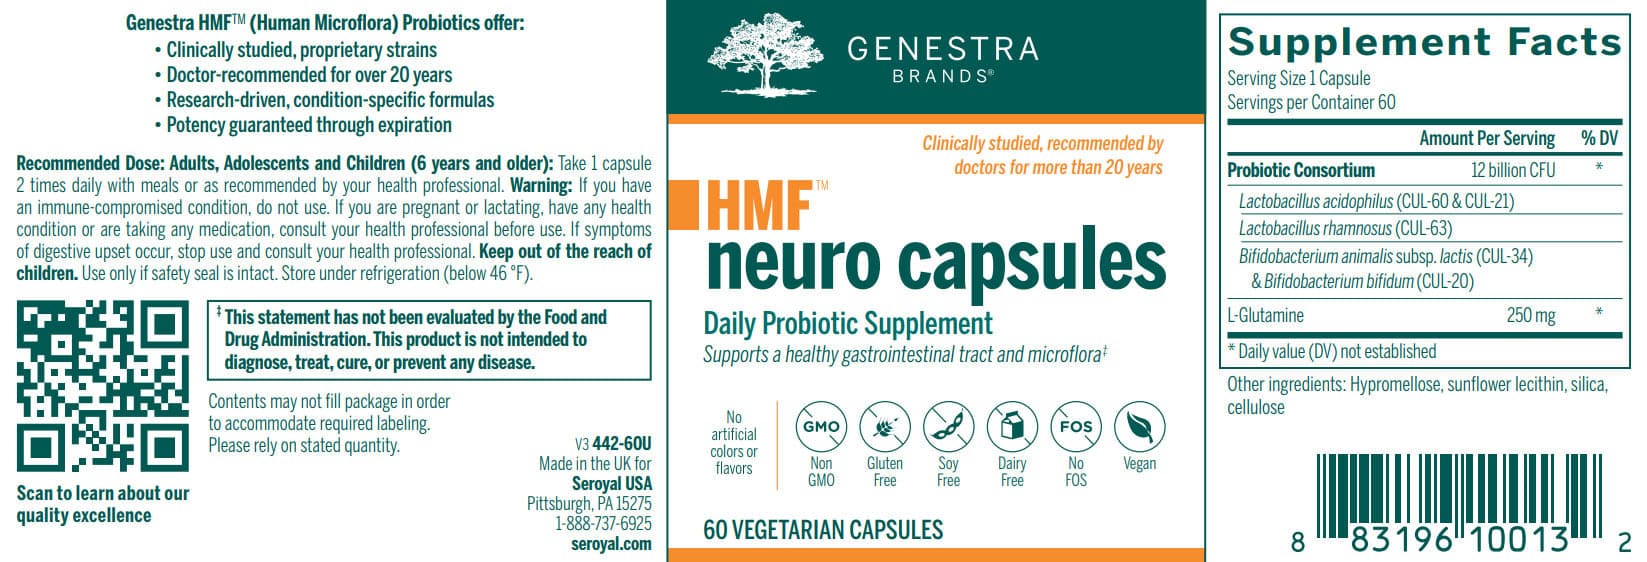 Genestra Brands HMF Neuro Capsules Label